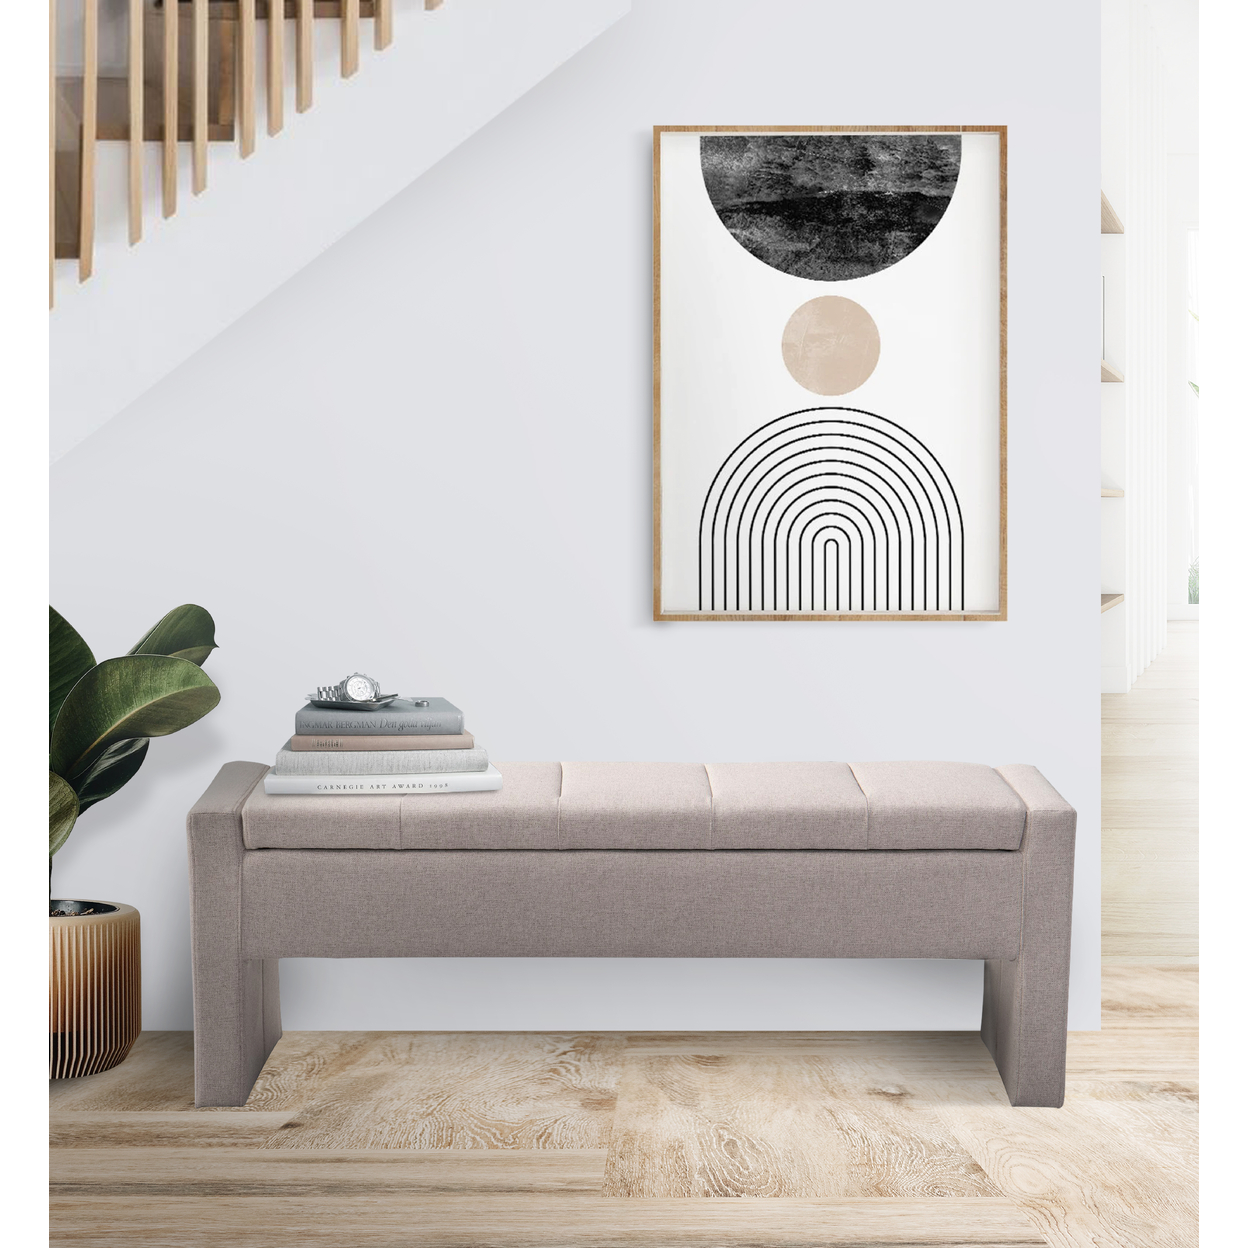 Iconic Home Kobi Storage Bench Linen Textured Upholstery Minimalist Design With Discrete Interior Compartment, Modern Contemporary - Beige